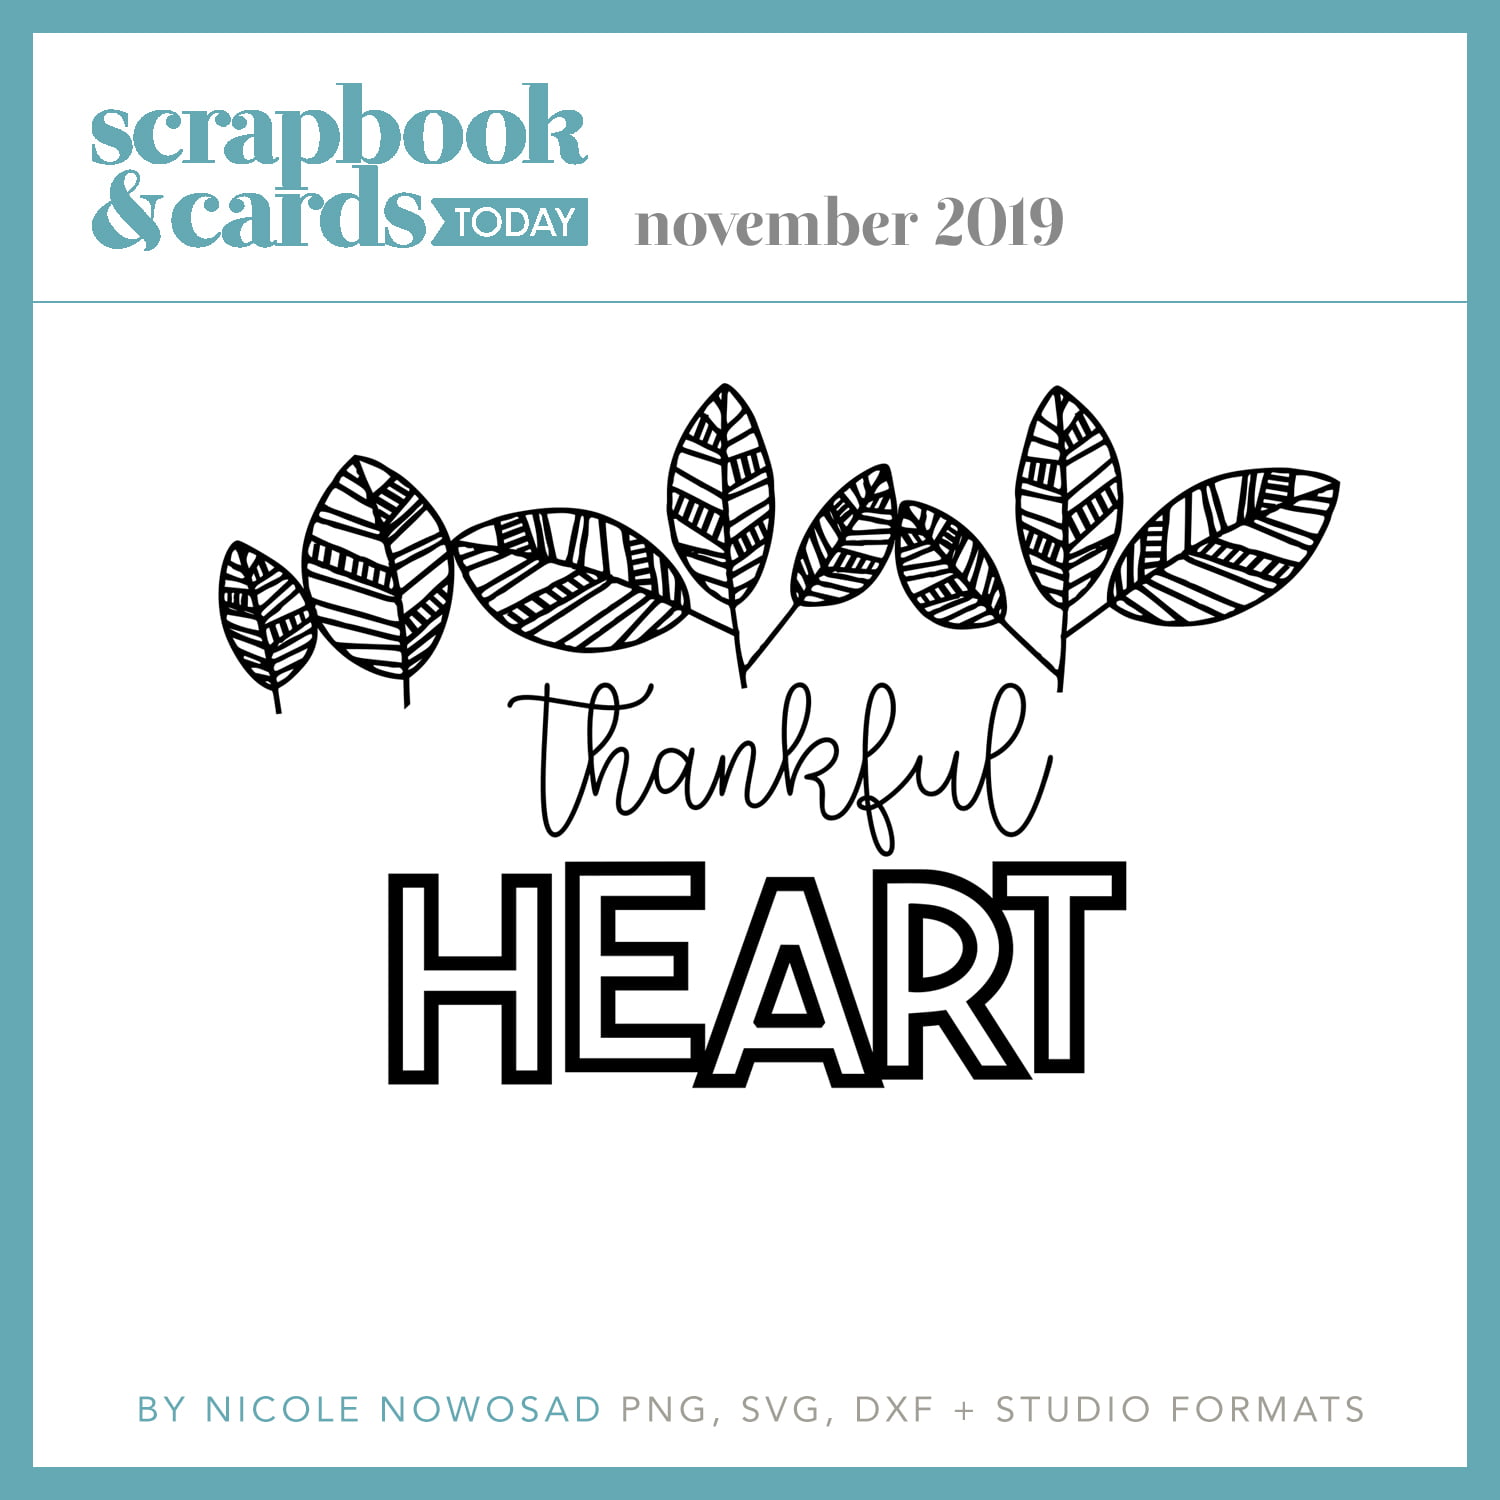 Scrapbook & Cards Today - November 2019 Free Cut File